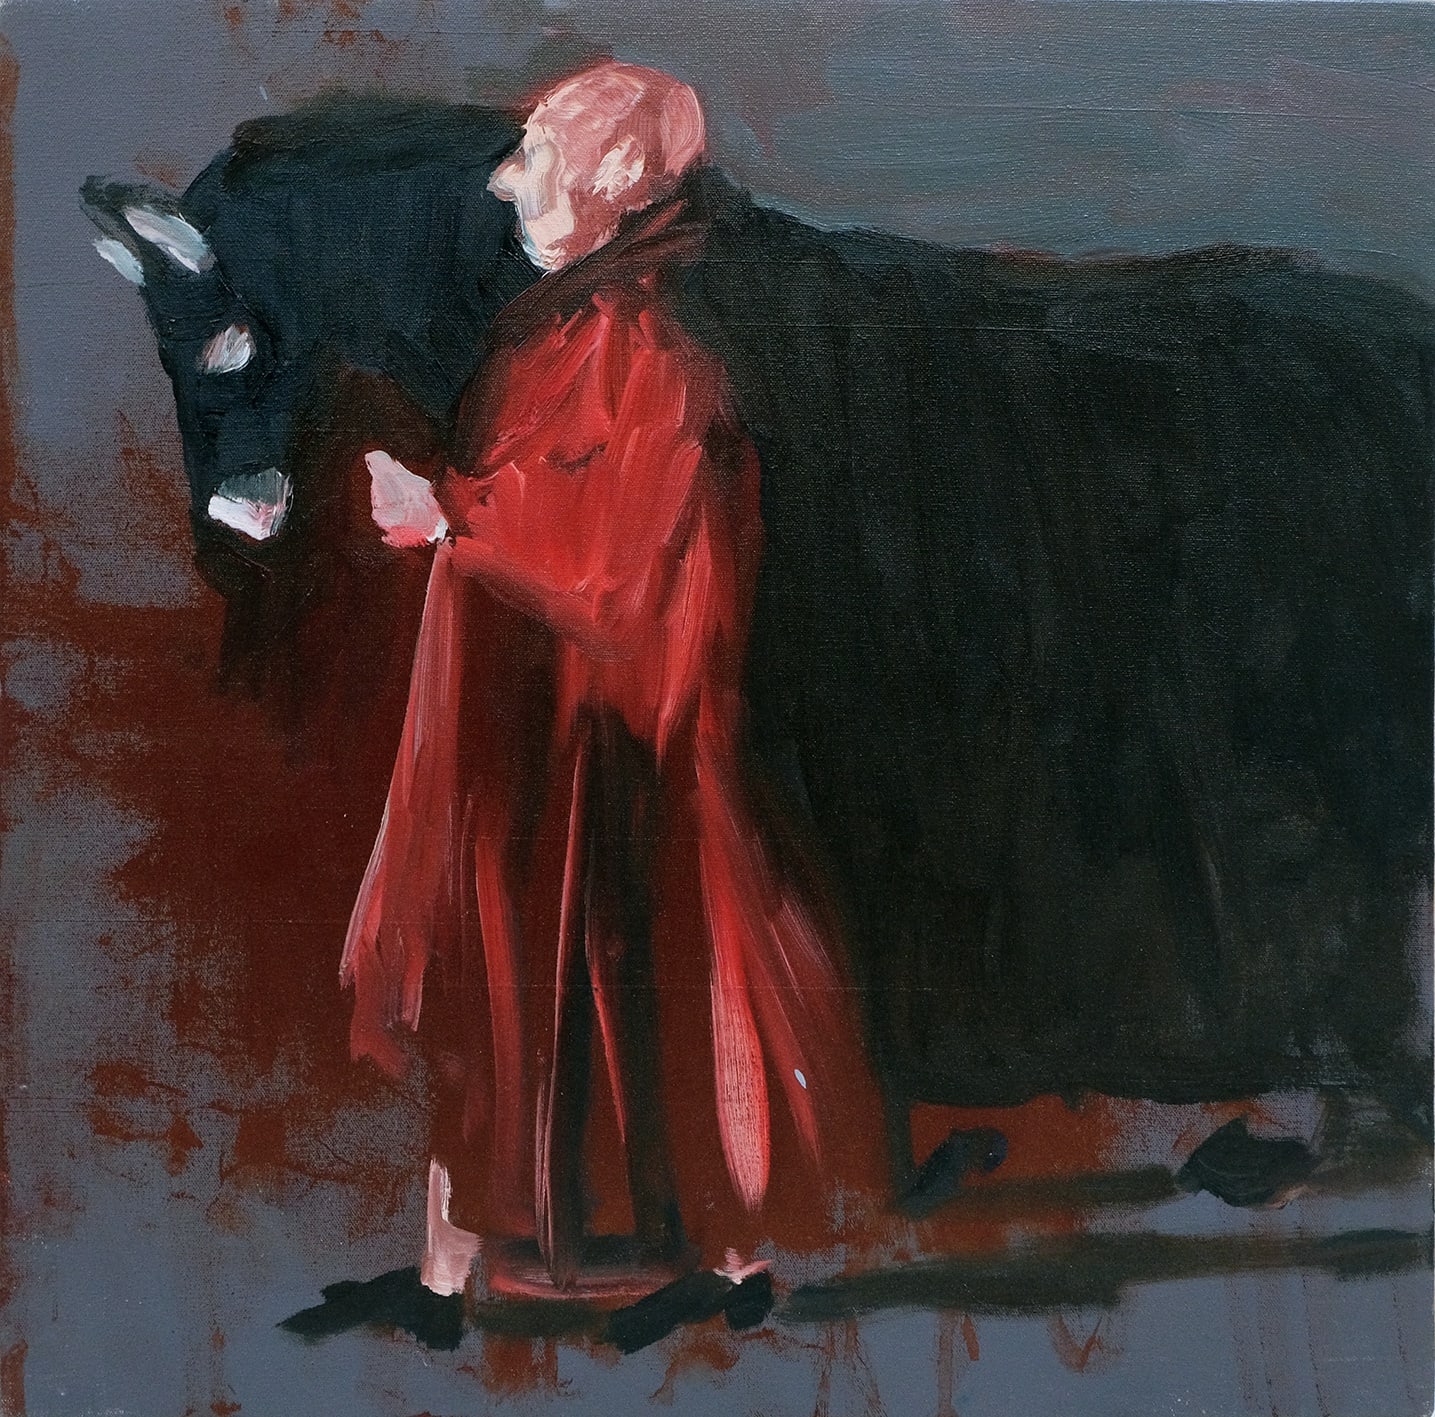 Eduardo Berliner, Cavalo [Horse], 2018